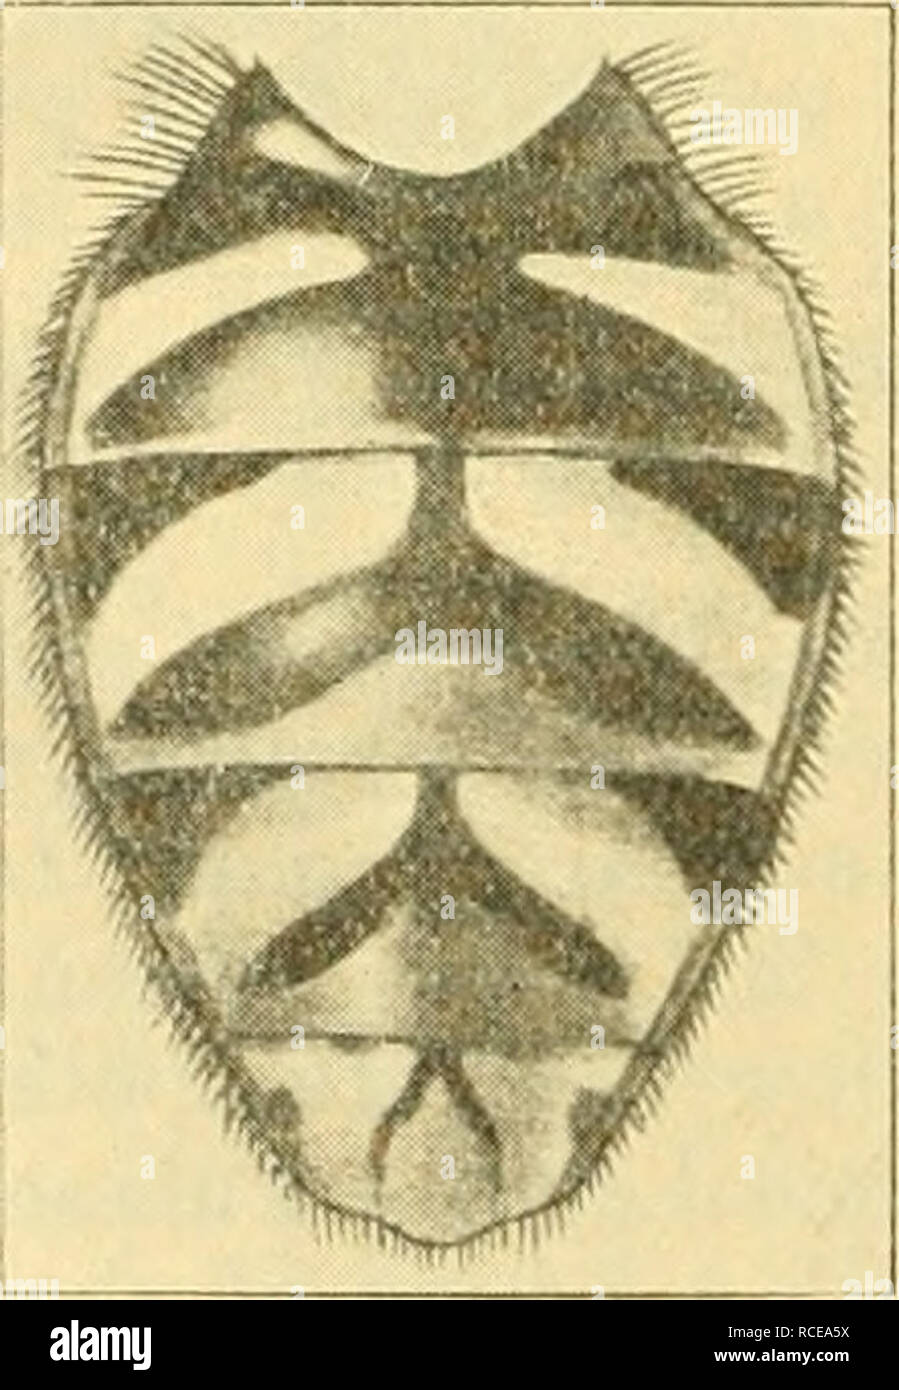 . Diptera Brachycera. Brachycera. 298 SYKPHID^. Chaka, Bijnor District, United Provinces, 23-31. xi. 1907 (type of sexfasciatum); North Bengal (type of haphyrus) ; Gudahir, Mlgiris, S. India, 6000 ft!, 19. ix. 1917 (Nagnath) ; Yercaud, Salem, Madras Presideiic% 27-29. x. 1913 ; between Rotiing and Jvalek, Abor Country, 2000-3500 ft., 14-15. iii. 1912 (Kemp); Kandy, Ceylon, xii. 1907 {E. E. Green, type of citronellum); Pnndaluoya, Ceylon, iv and ix. 1893 (E. E. Green) ; Lower Ranges, Khasi tliils, Assam, 1878 (Chennetl). Type of haphyrus, a c?, in the British Museum ; of sexfasciafum, a $ , in Stock Photo